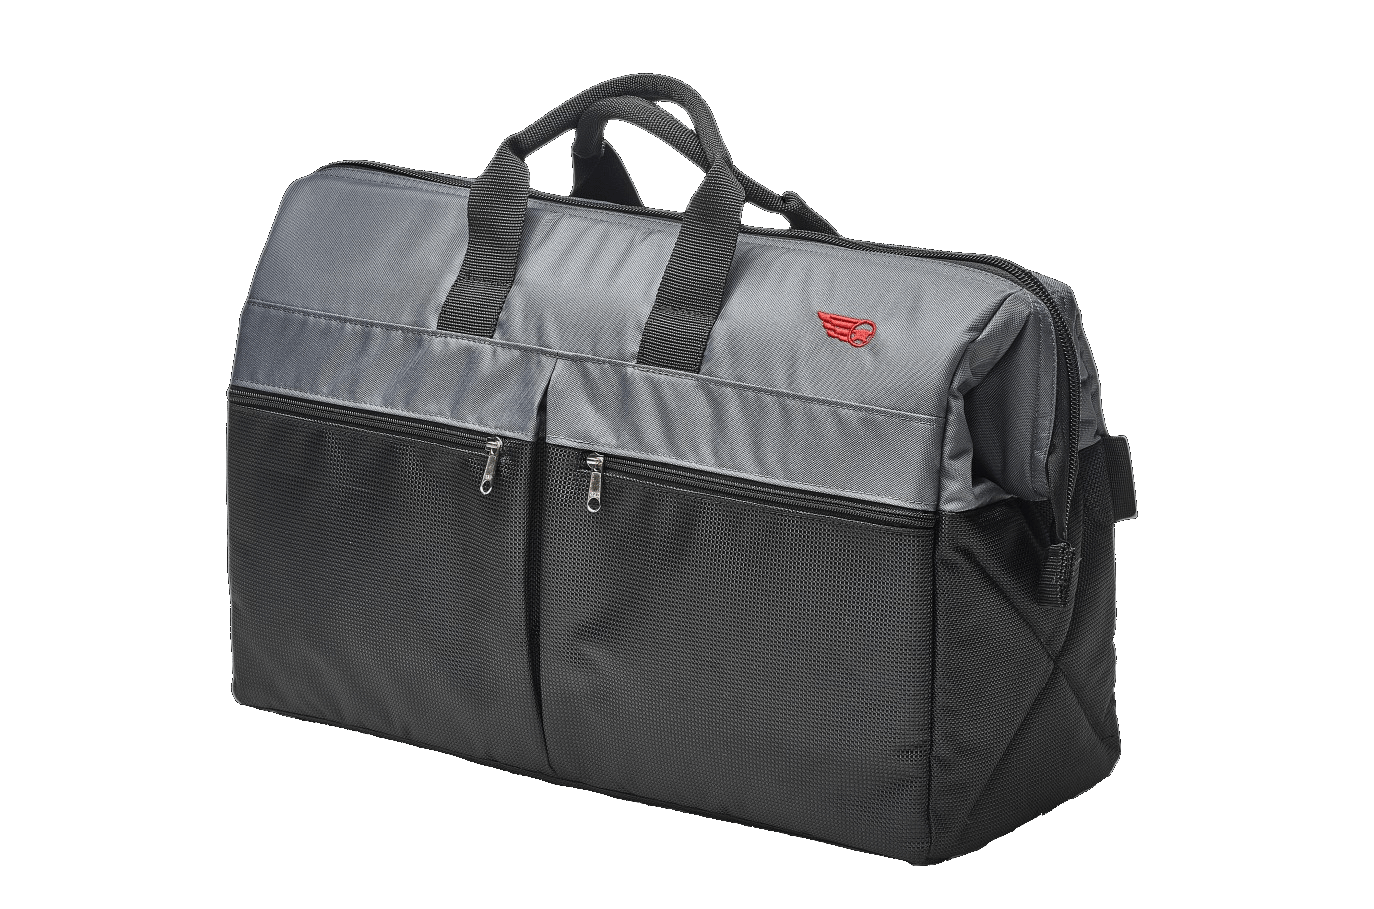 TrendBy Dumpin Trunk Travel Bag in Black-grey